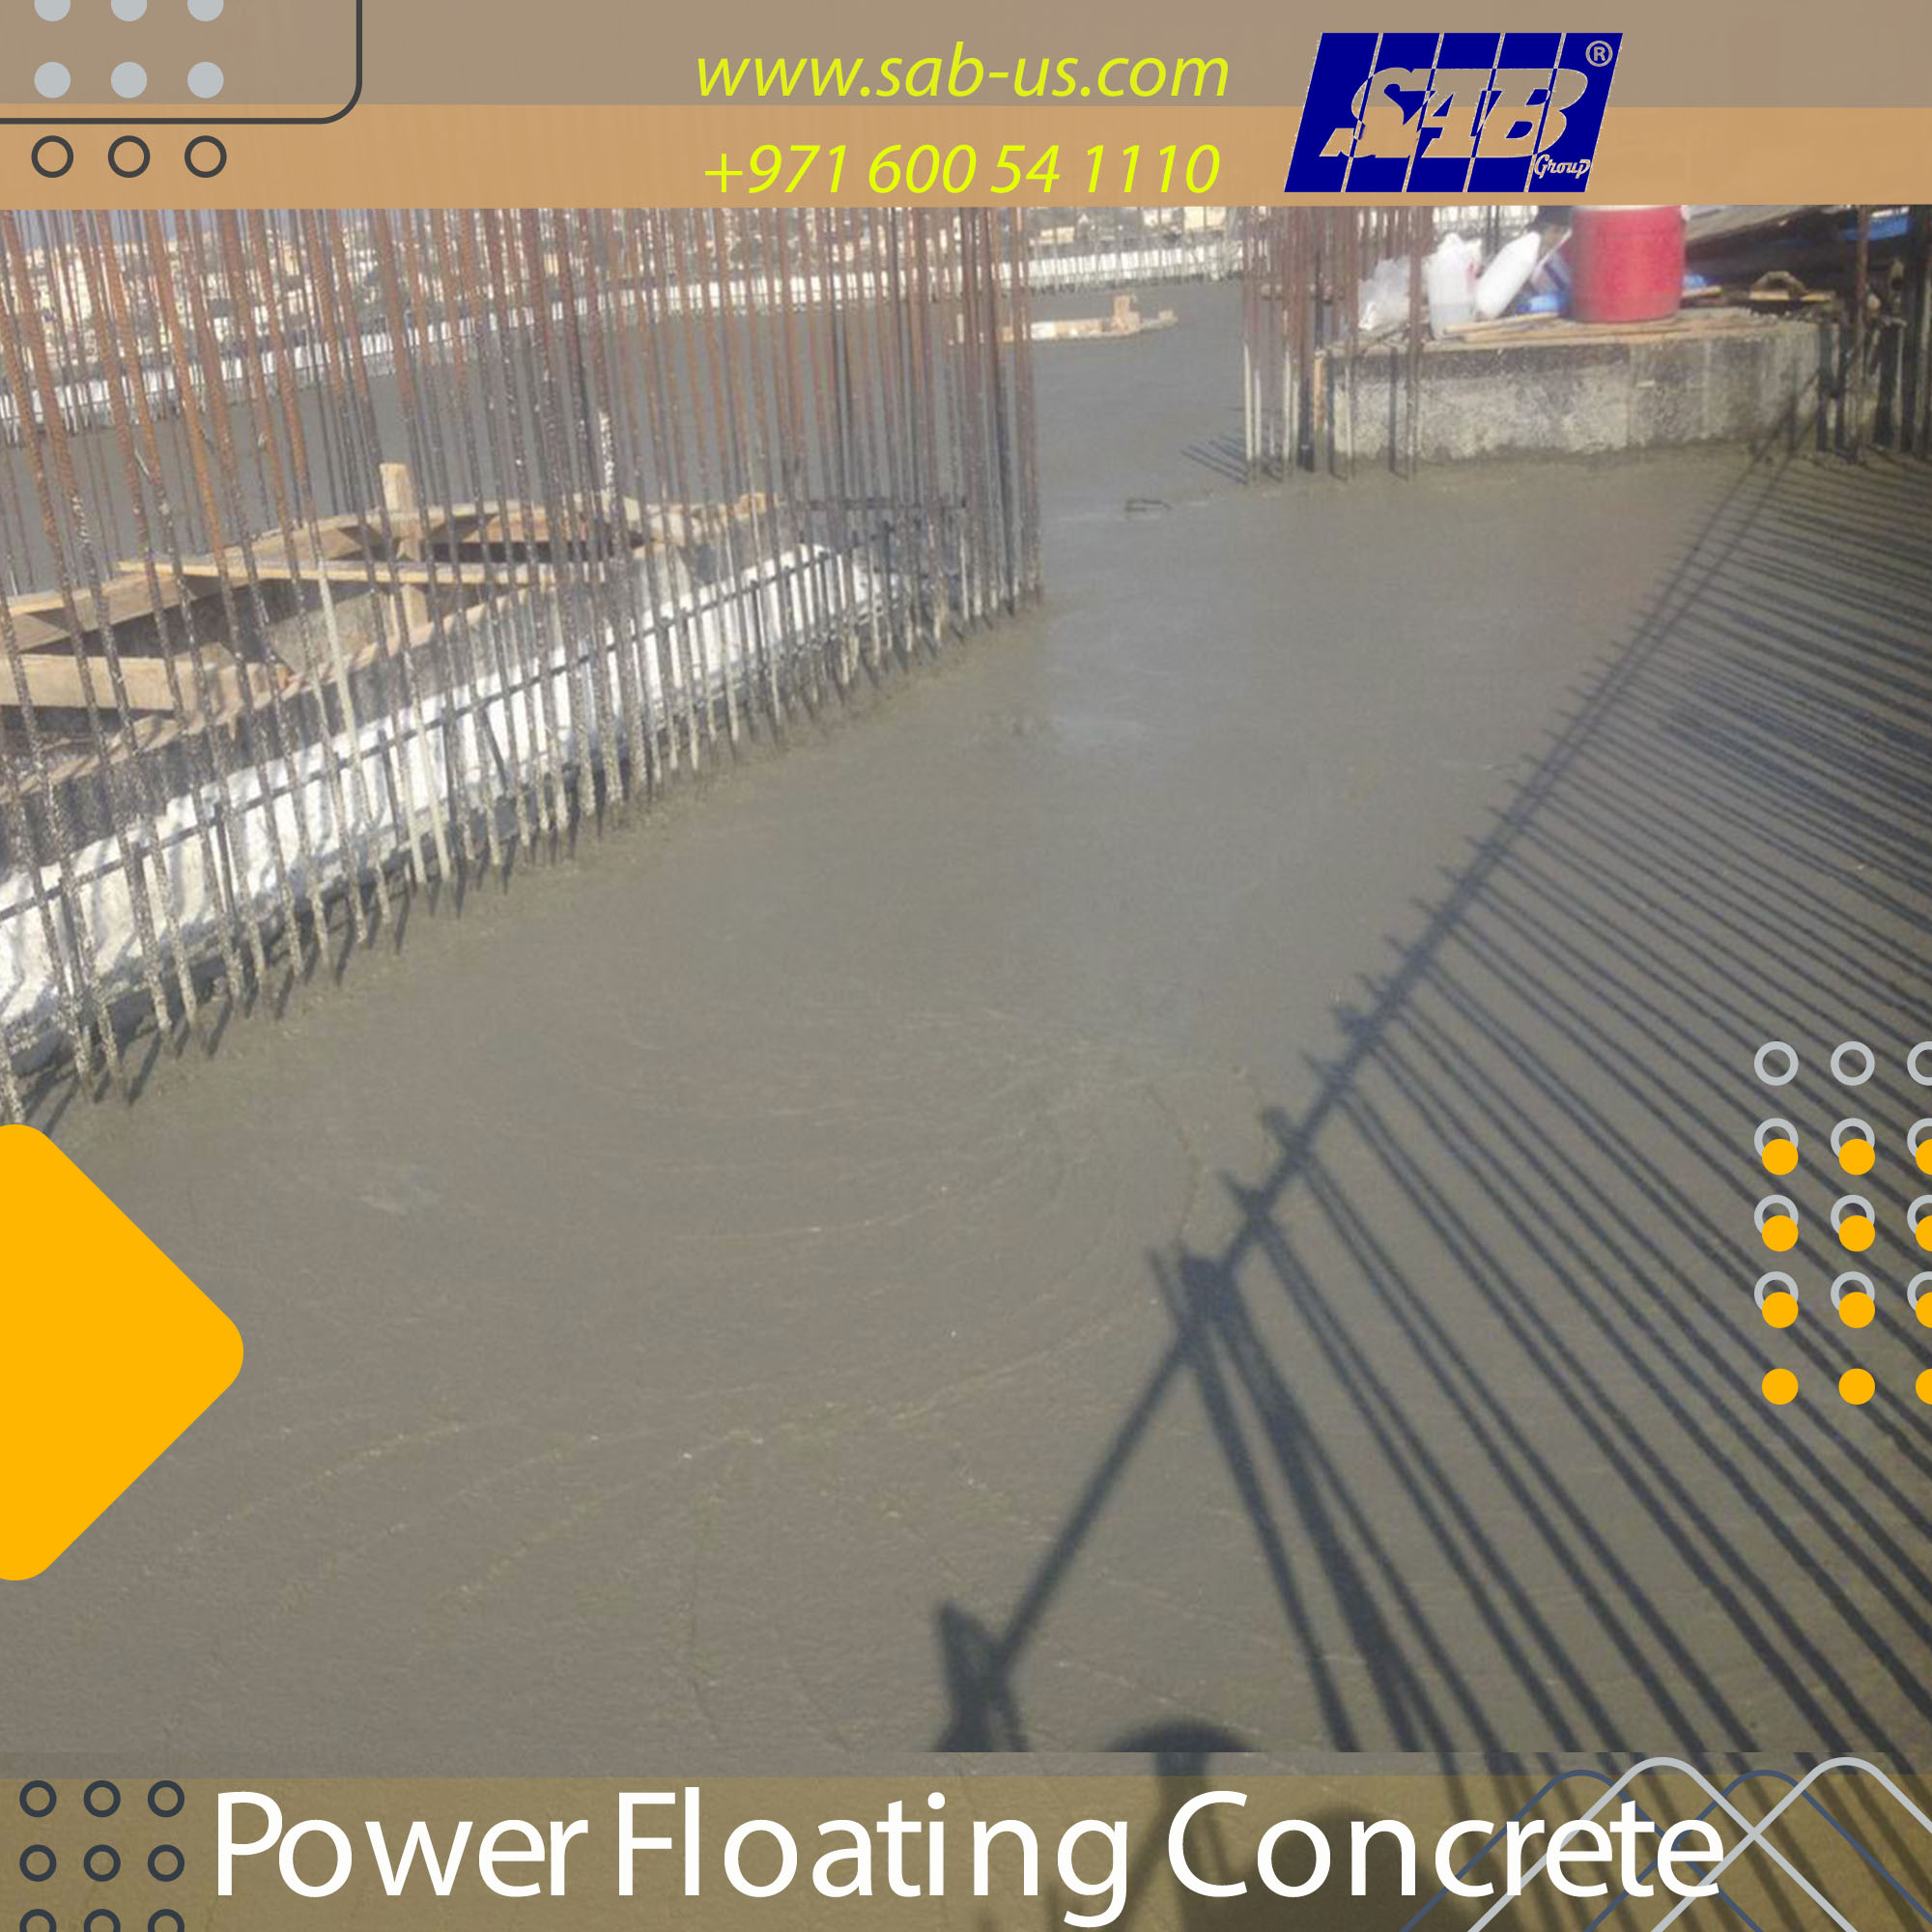 SAB® Power floating concrete